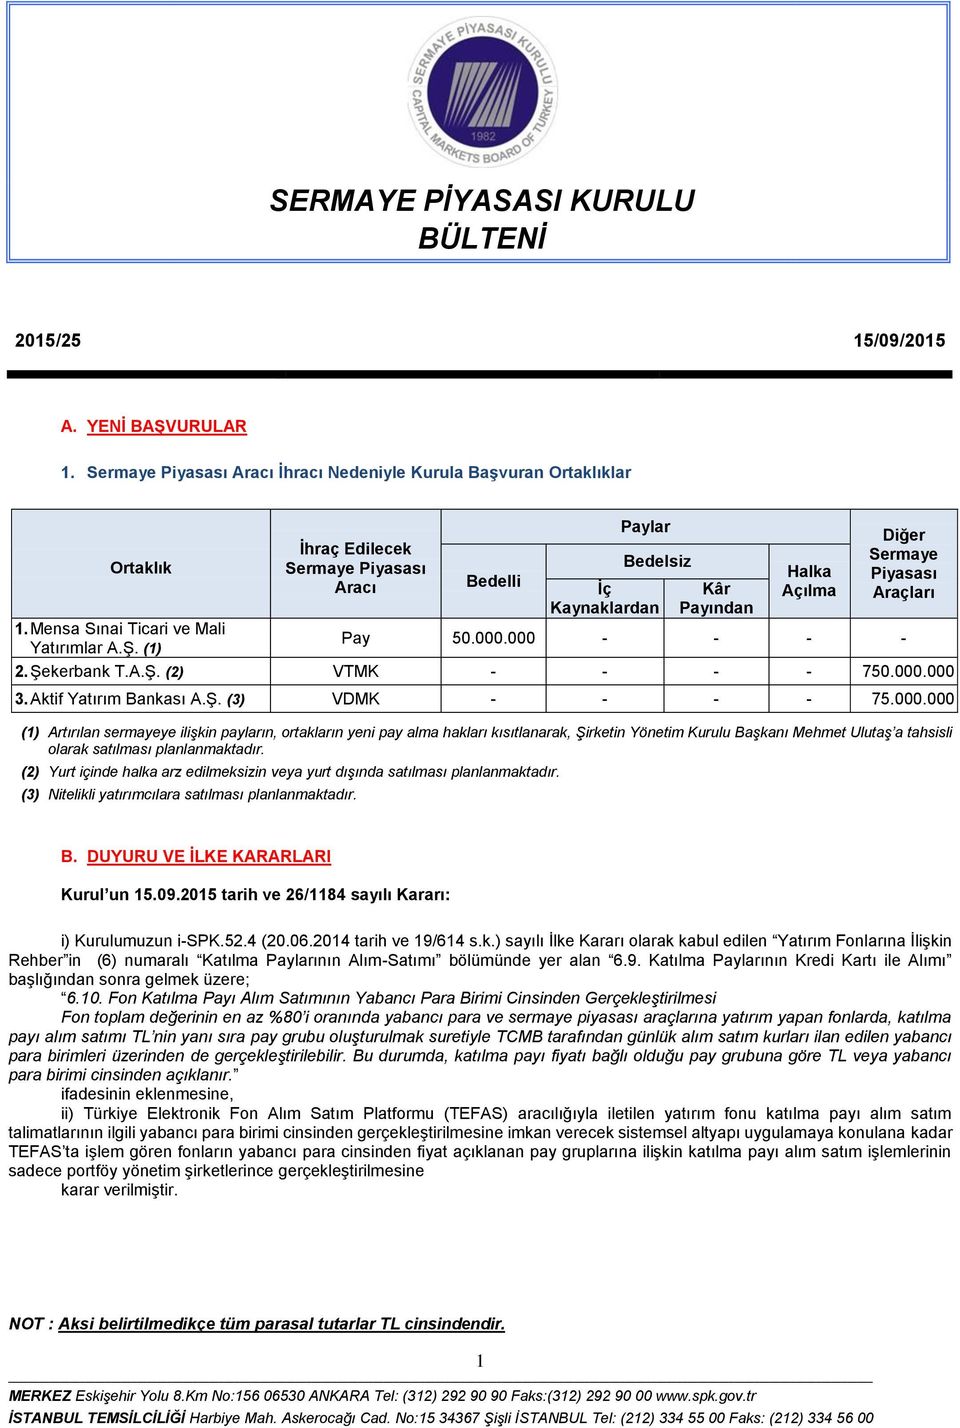 Mensa Sınai Ticari ve Mali Yatırımlar A.Ş. (1) Pay 50.000.